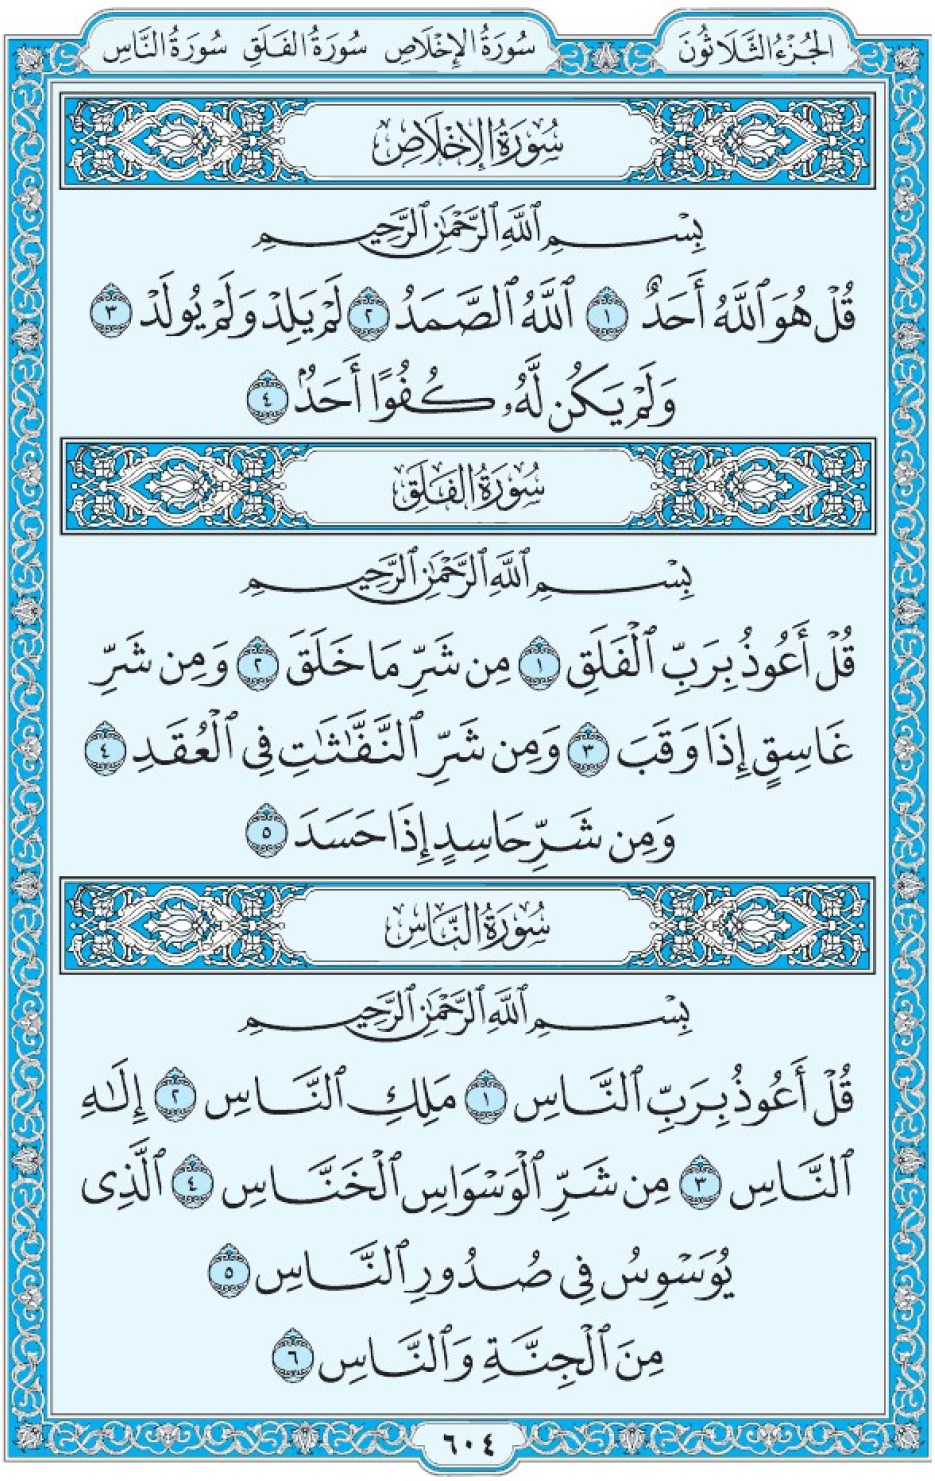 Коран Мединский мусхаф страница 604, суры 112 аль-Ихляс, 113 аль-Фаляк, 114 ан-Нас